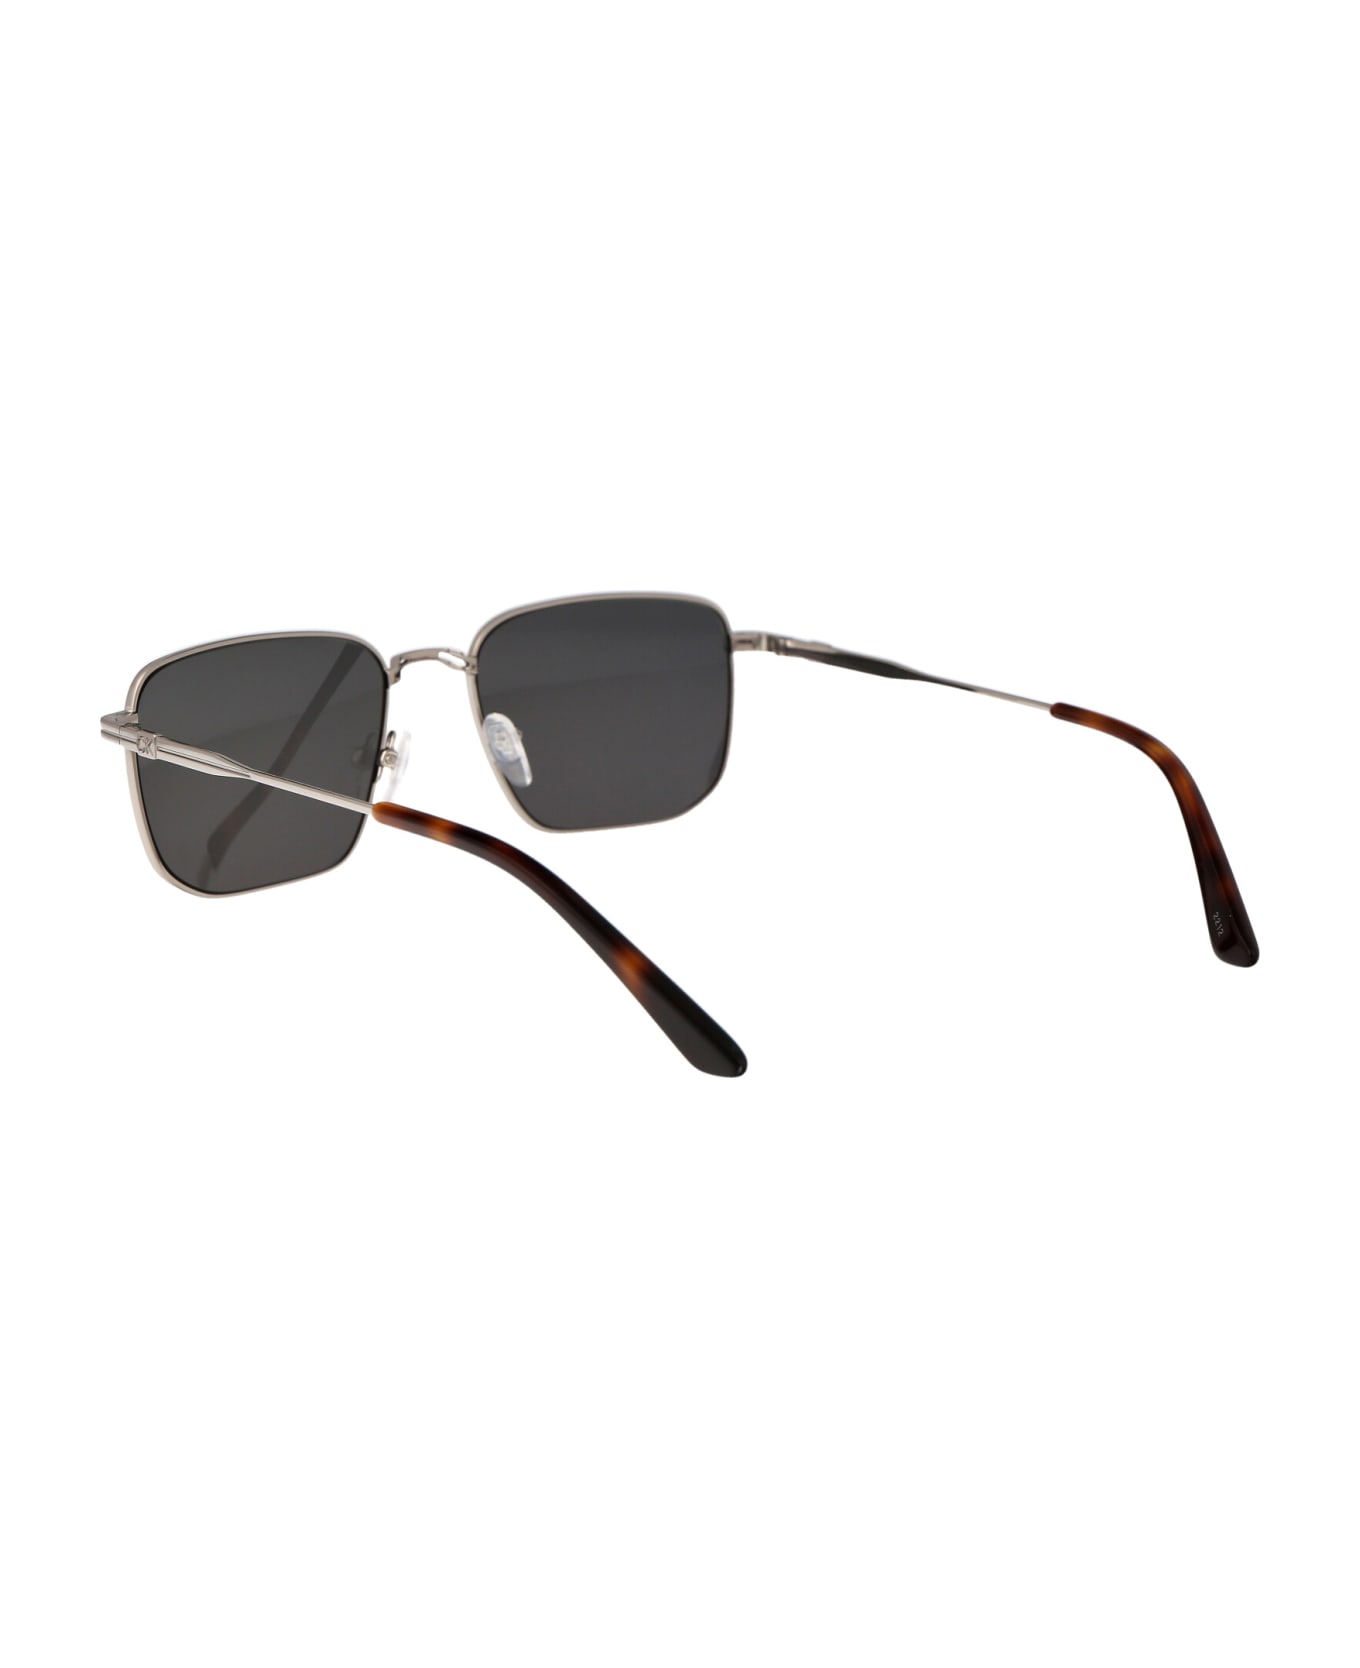 Calvin Klein Ck23101s Sunglasses - 045 SILVER